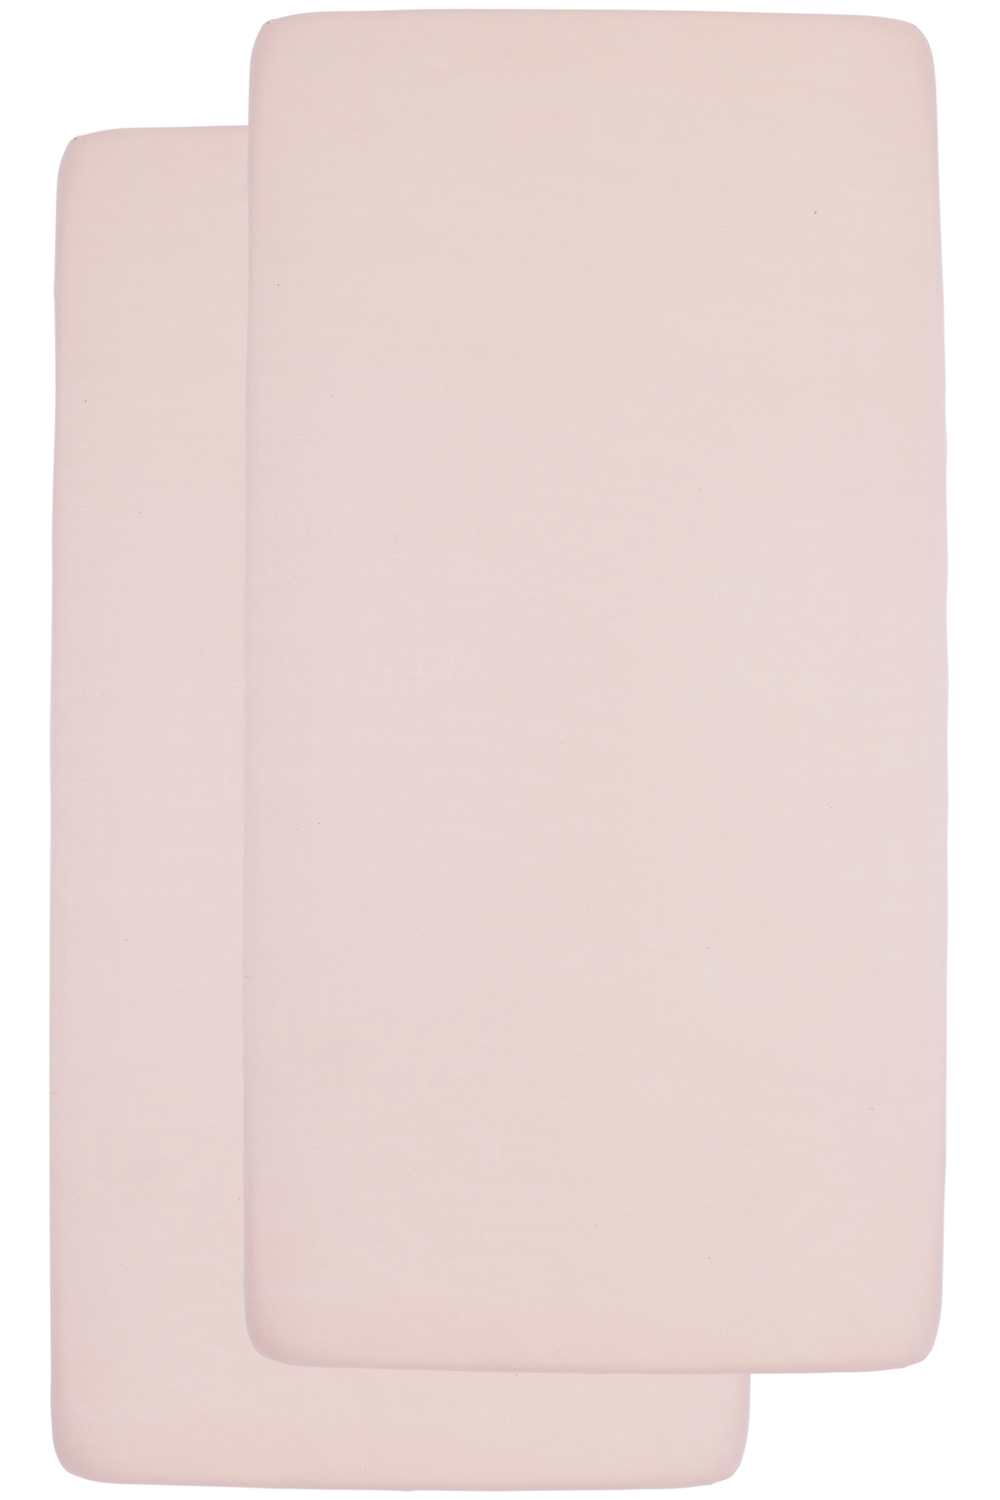 Jersey Hoeslaken Wieg 2-pack - Soft Pink - 40x80/90cm